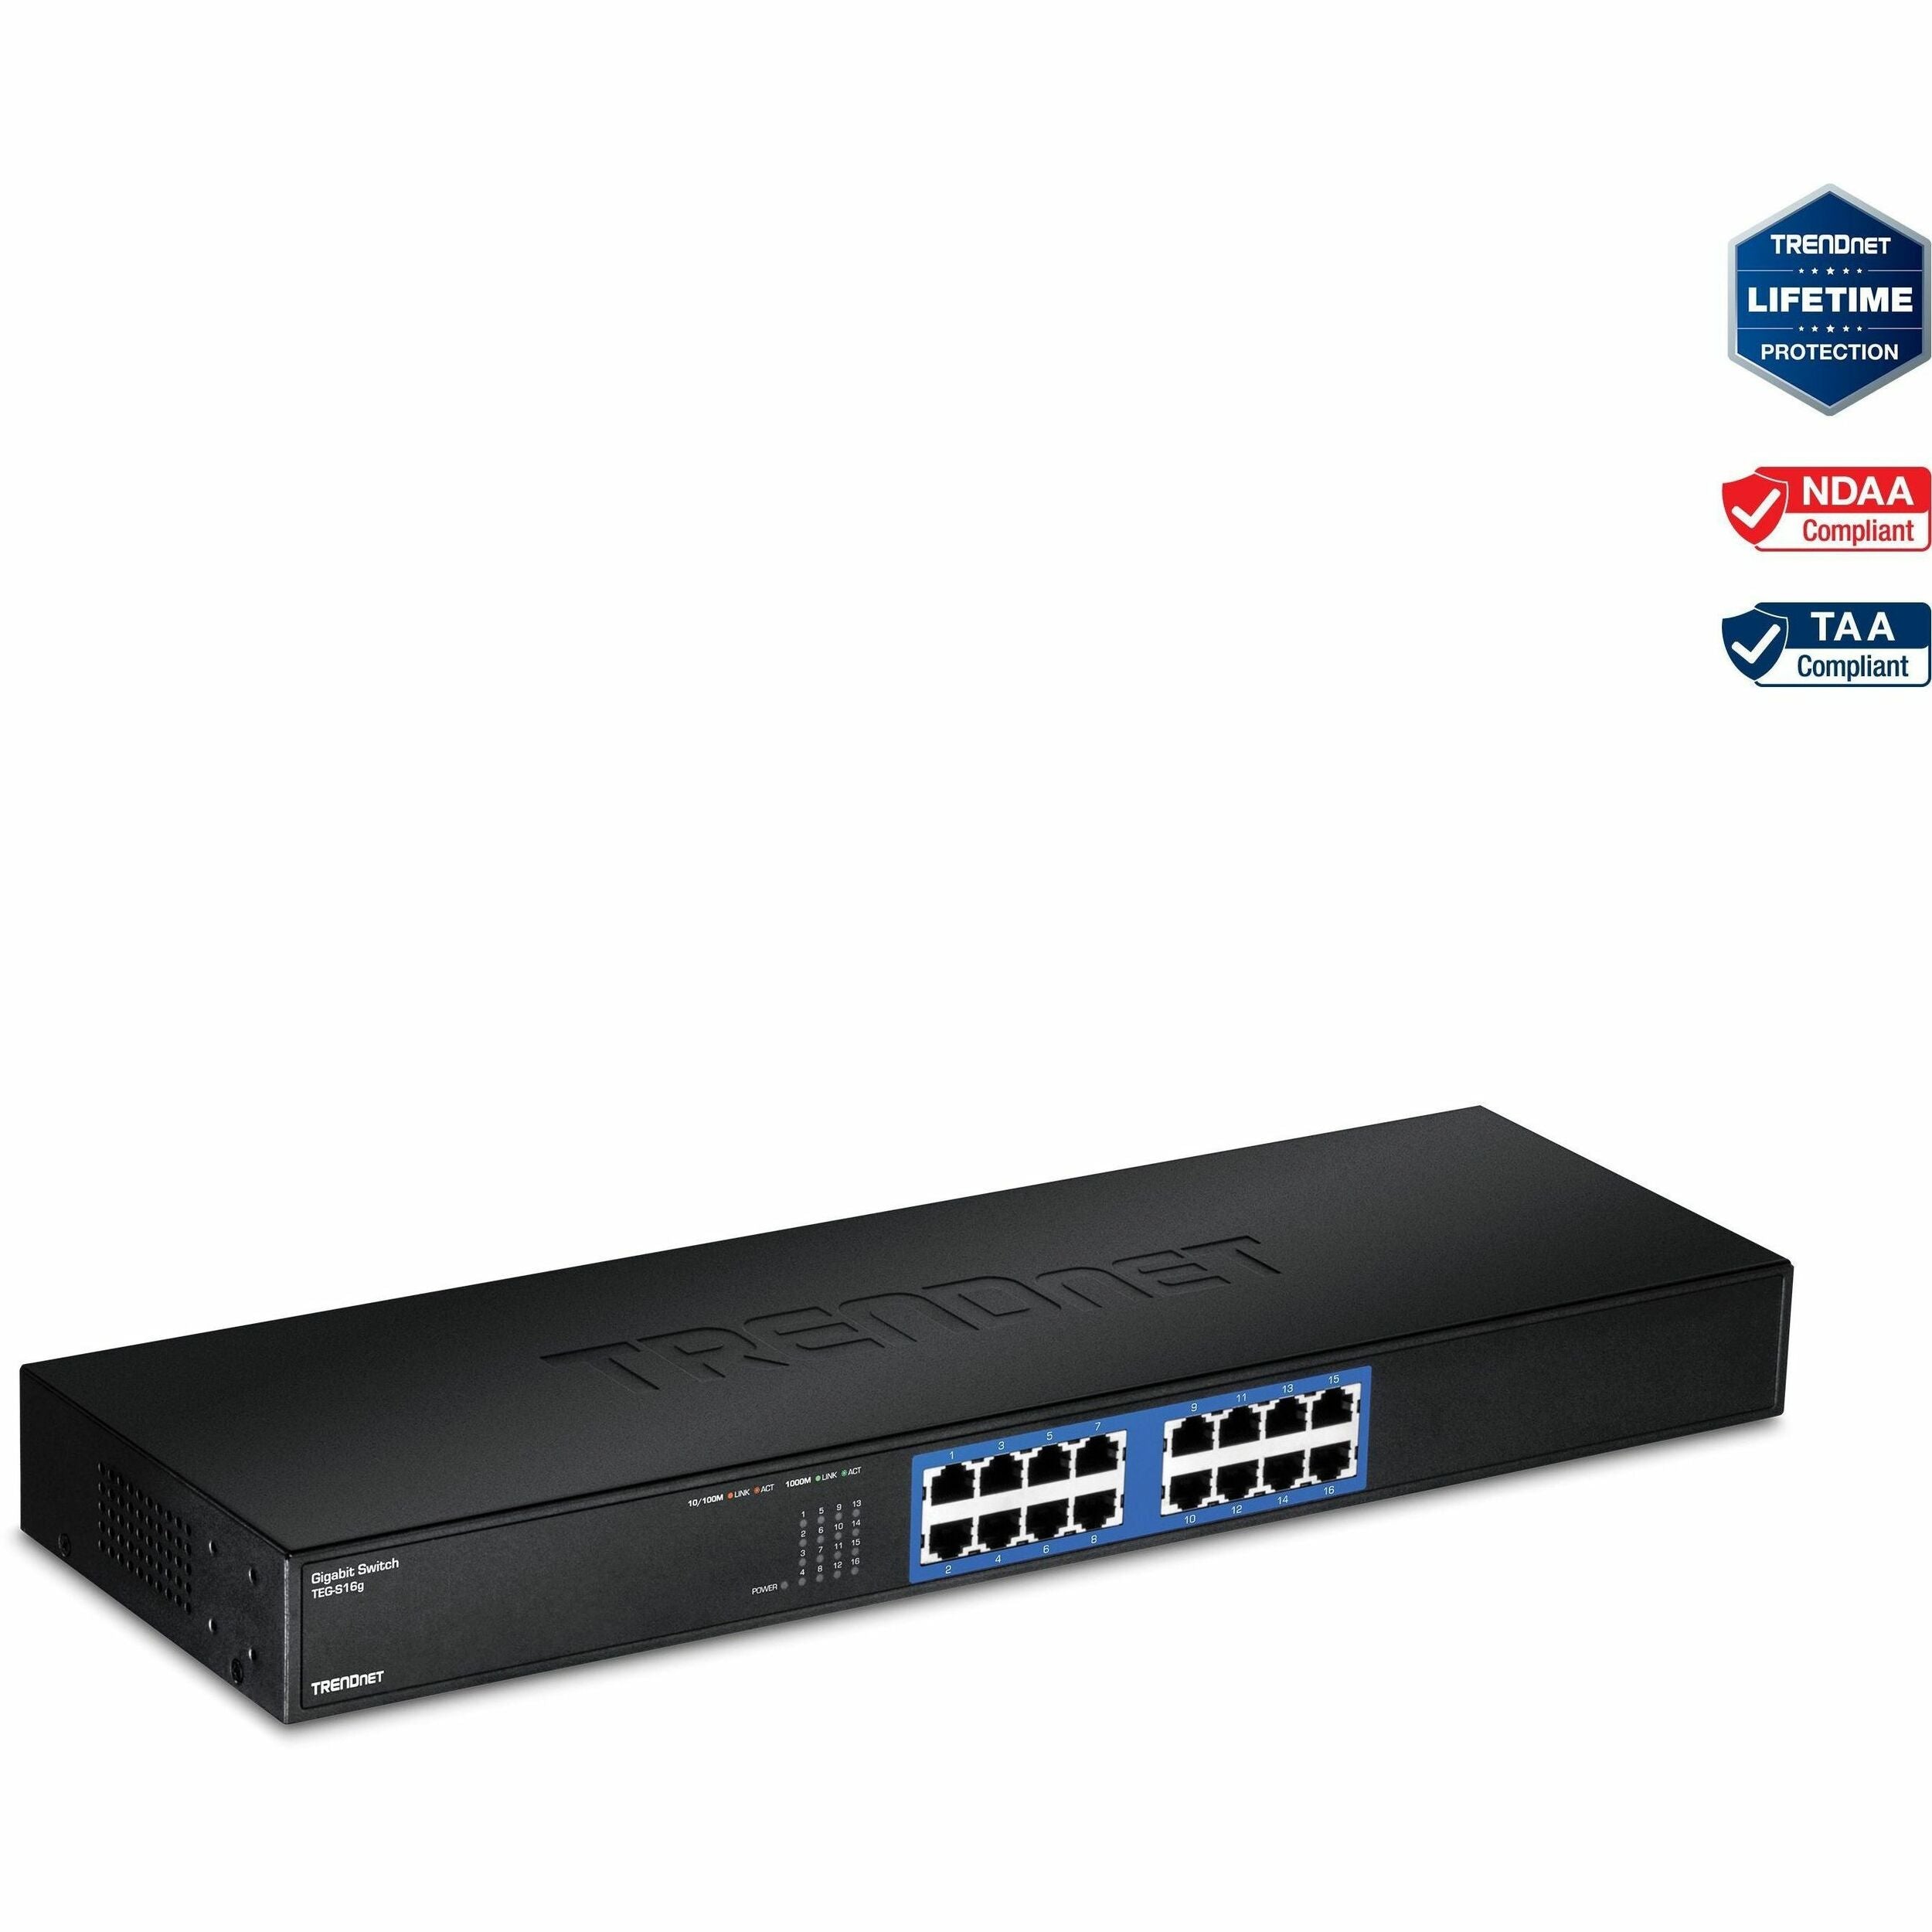 TRENDnet 16-Port Unmanaged Gigabit GREENnet Switch, 16 x RJ-45 Ports, 32Gbps Switching Capacity, Fanless, Rack Mountable, Network Ethernet Switch, Lifetime Protection, Black, TEG-S16G - TEG-S16g